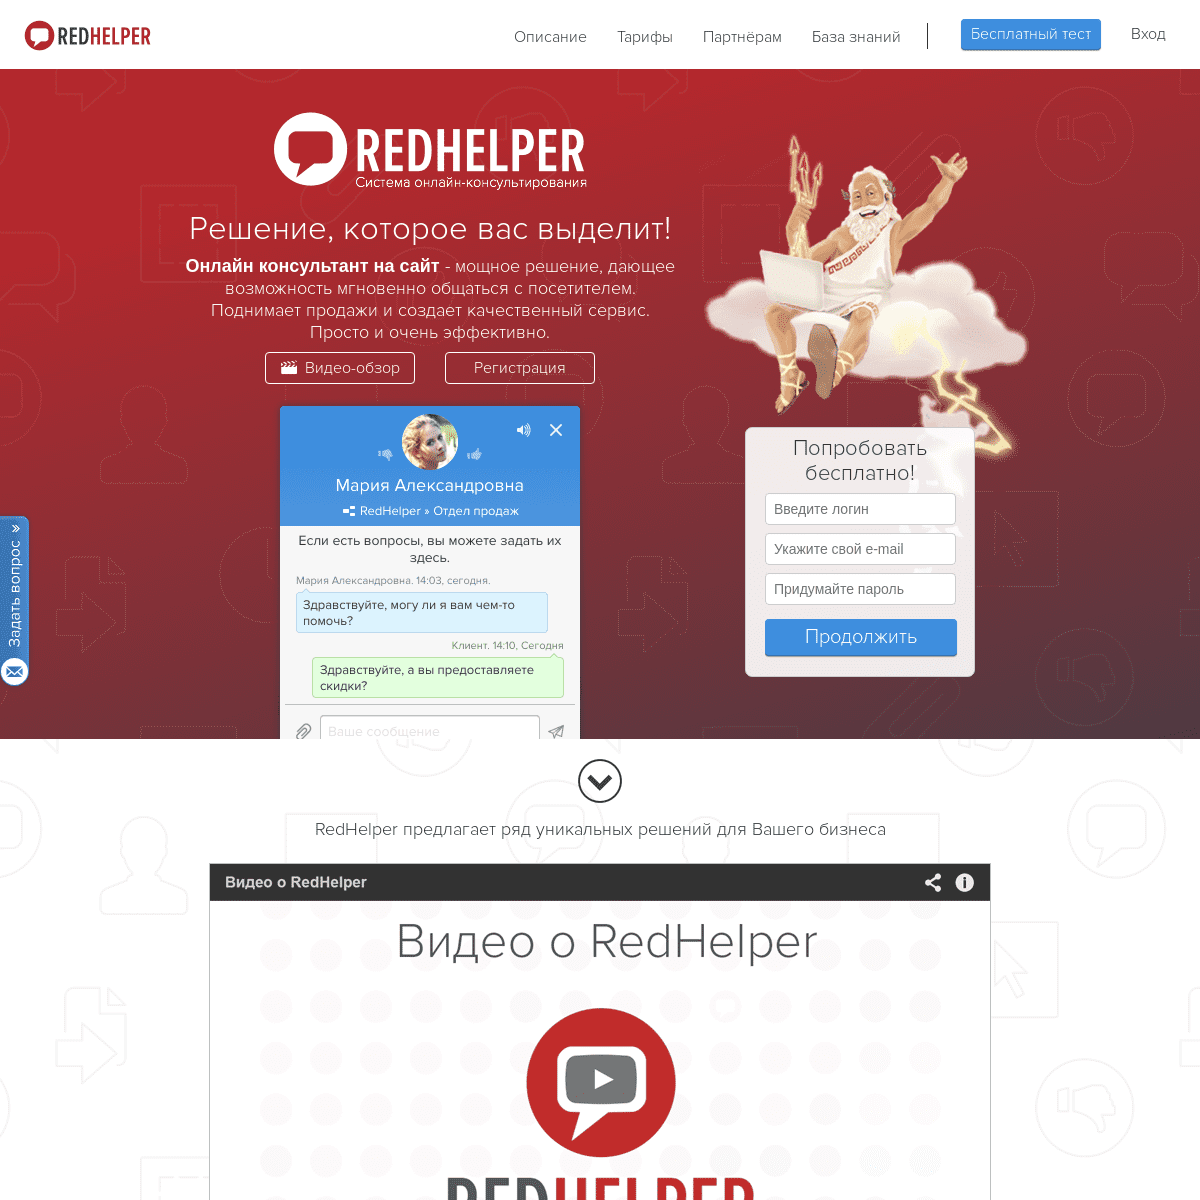 A complete backup of redhelper.ru